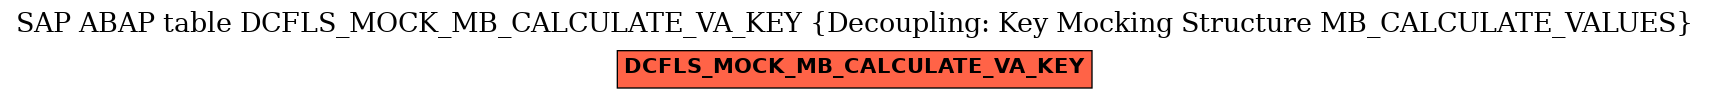 E-R Diagram for table DCFLS_MOCK_MB_CALCULATE_VA_KEY (Decoupling: Key Mocking Structure MB_CALCULATE_VALUES)